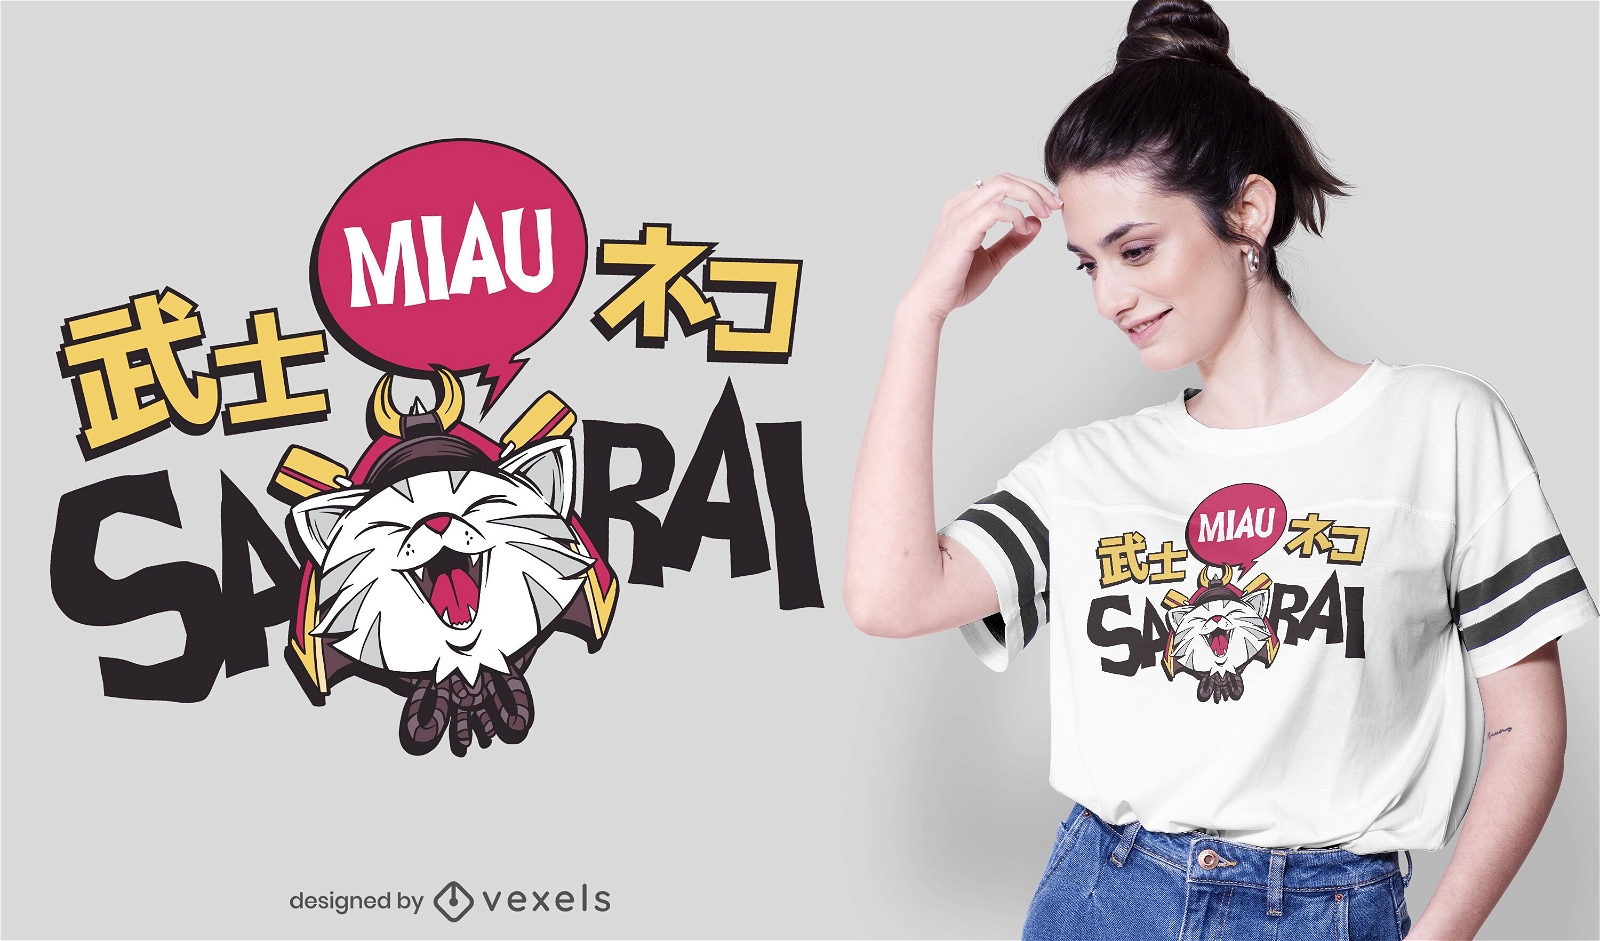 Samiaurai cat t-shirt design